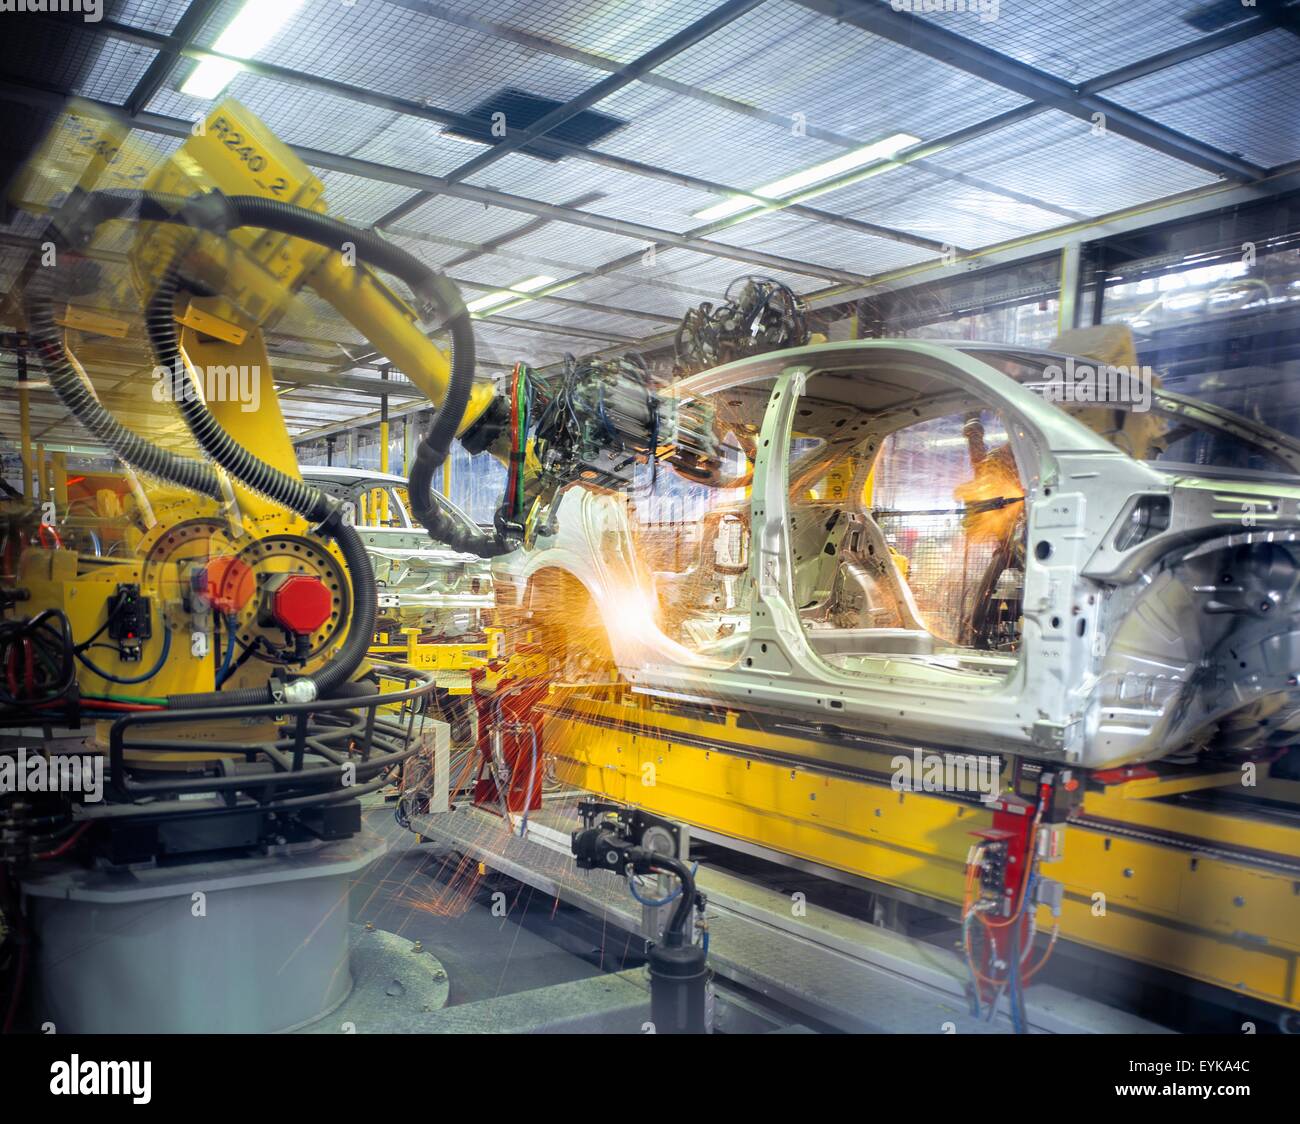 Car body welding robots in car factory Stock Photo - Alamy